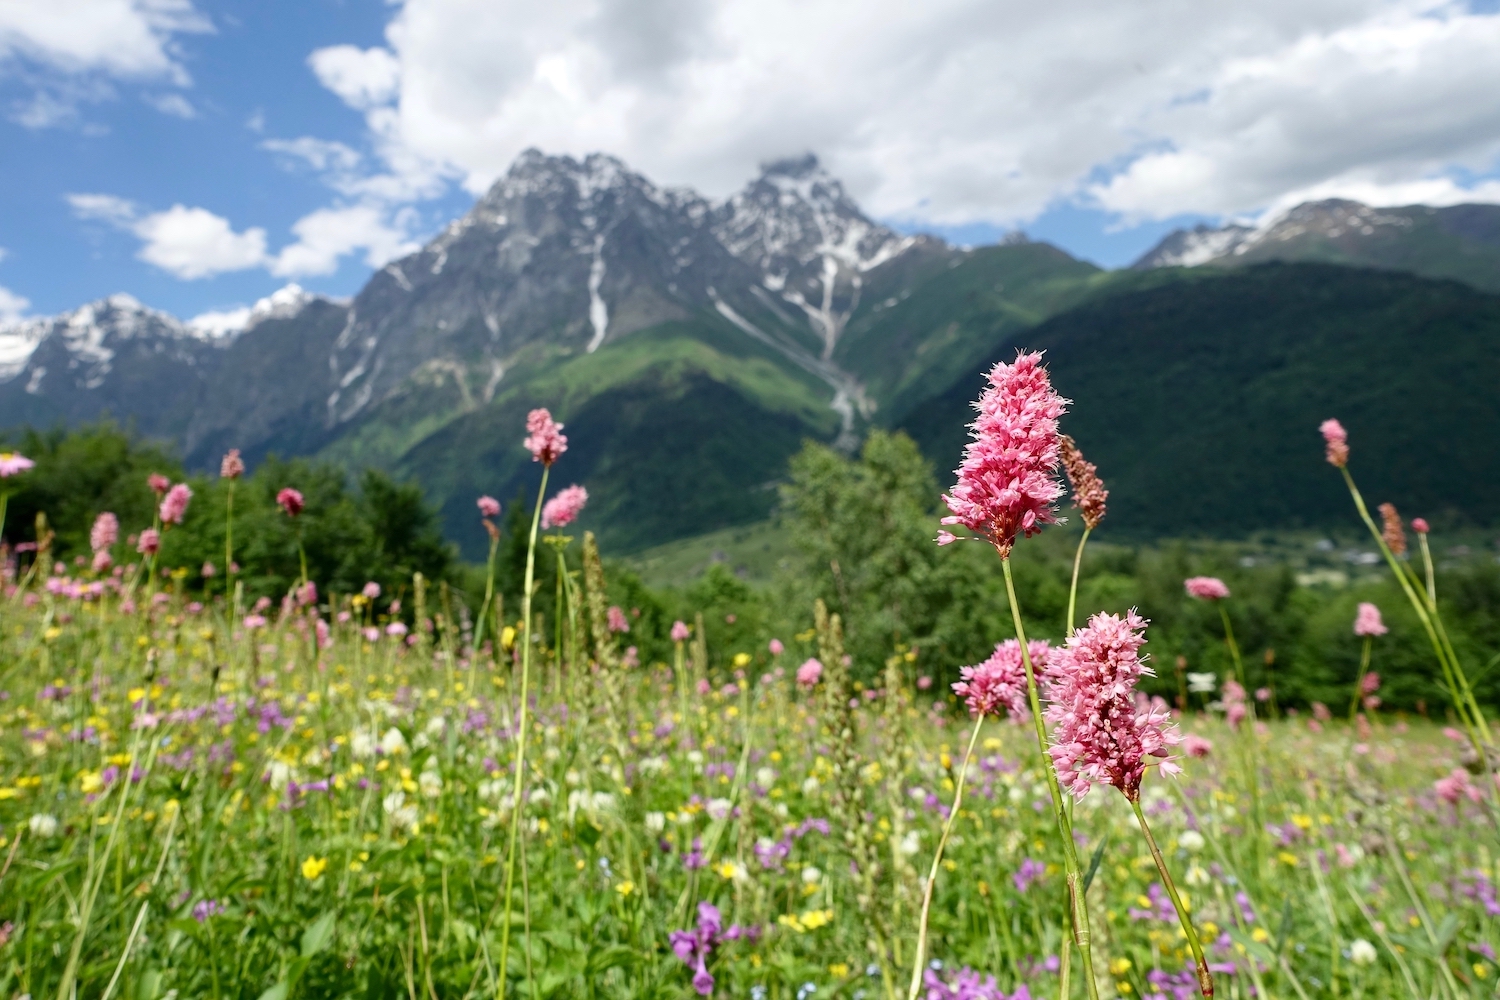 June wildflowers in Svaneti, Georgia. Image: Meagan Neal/Transcaucasian Trail Association